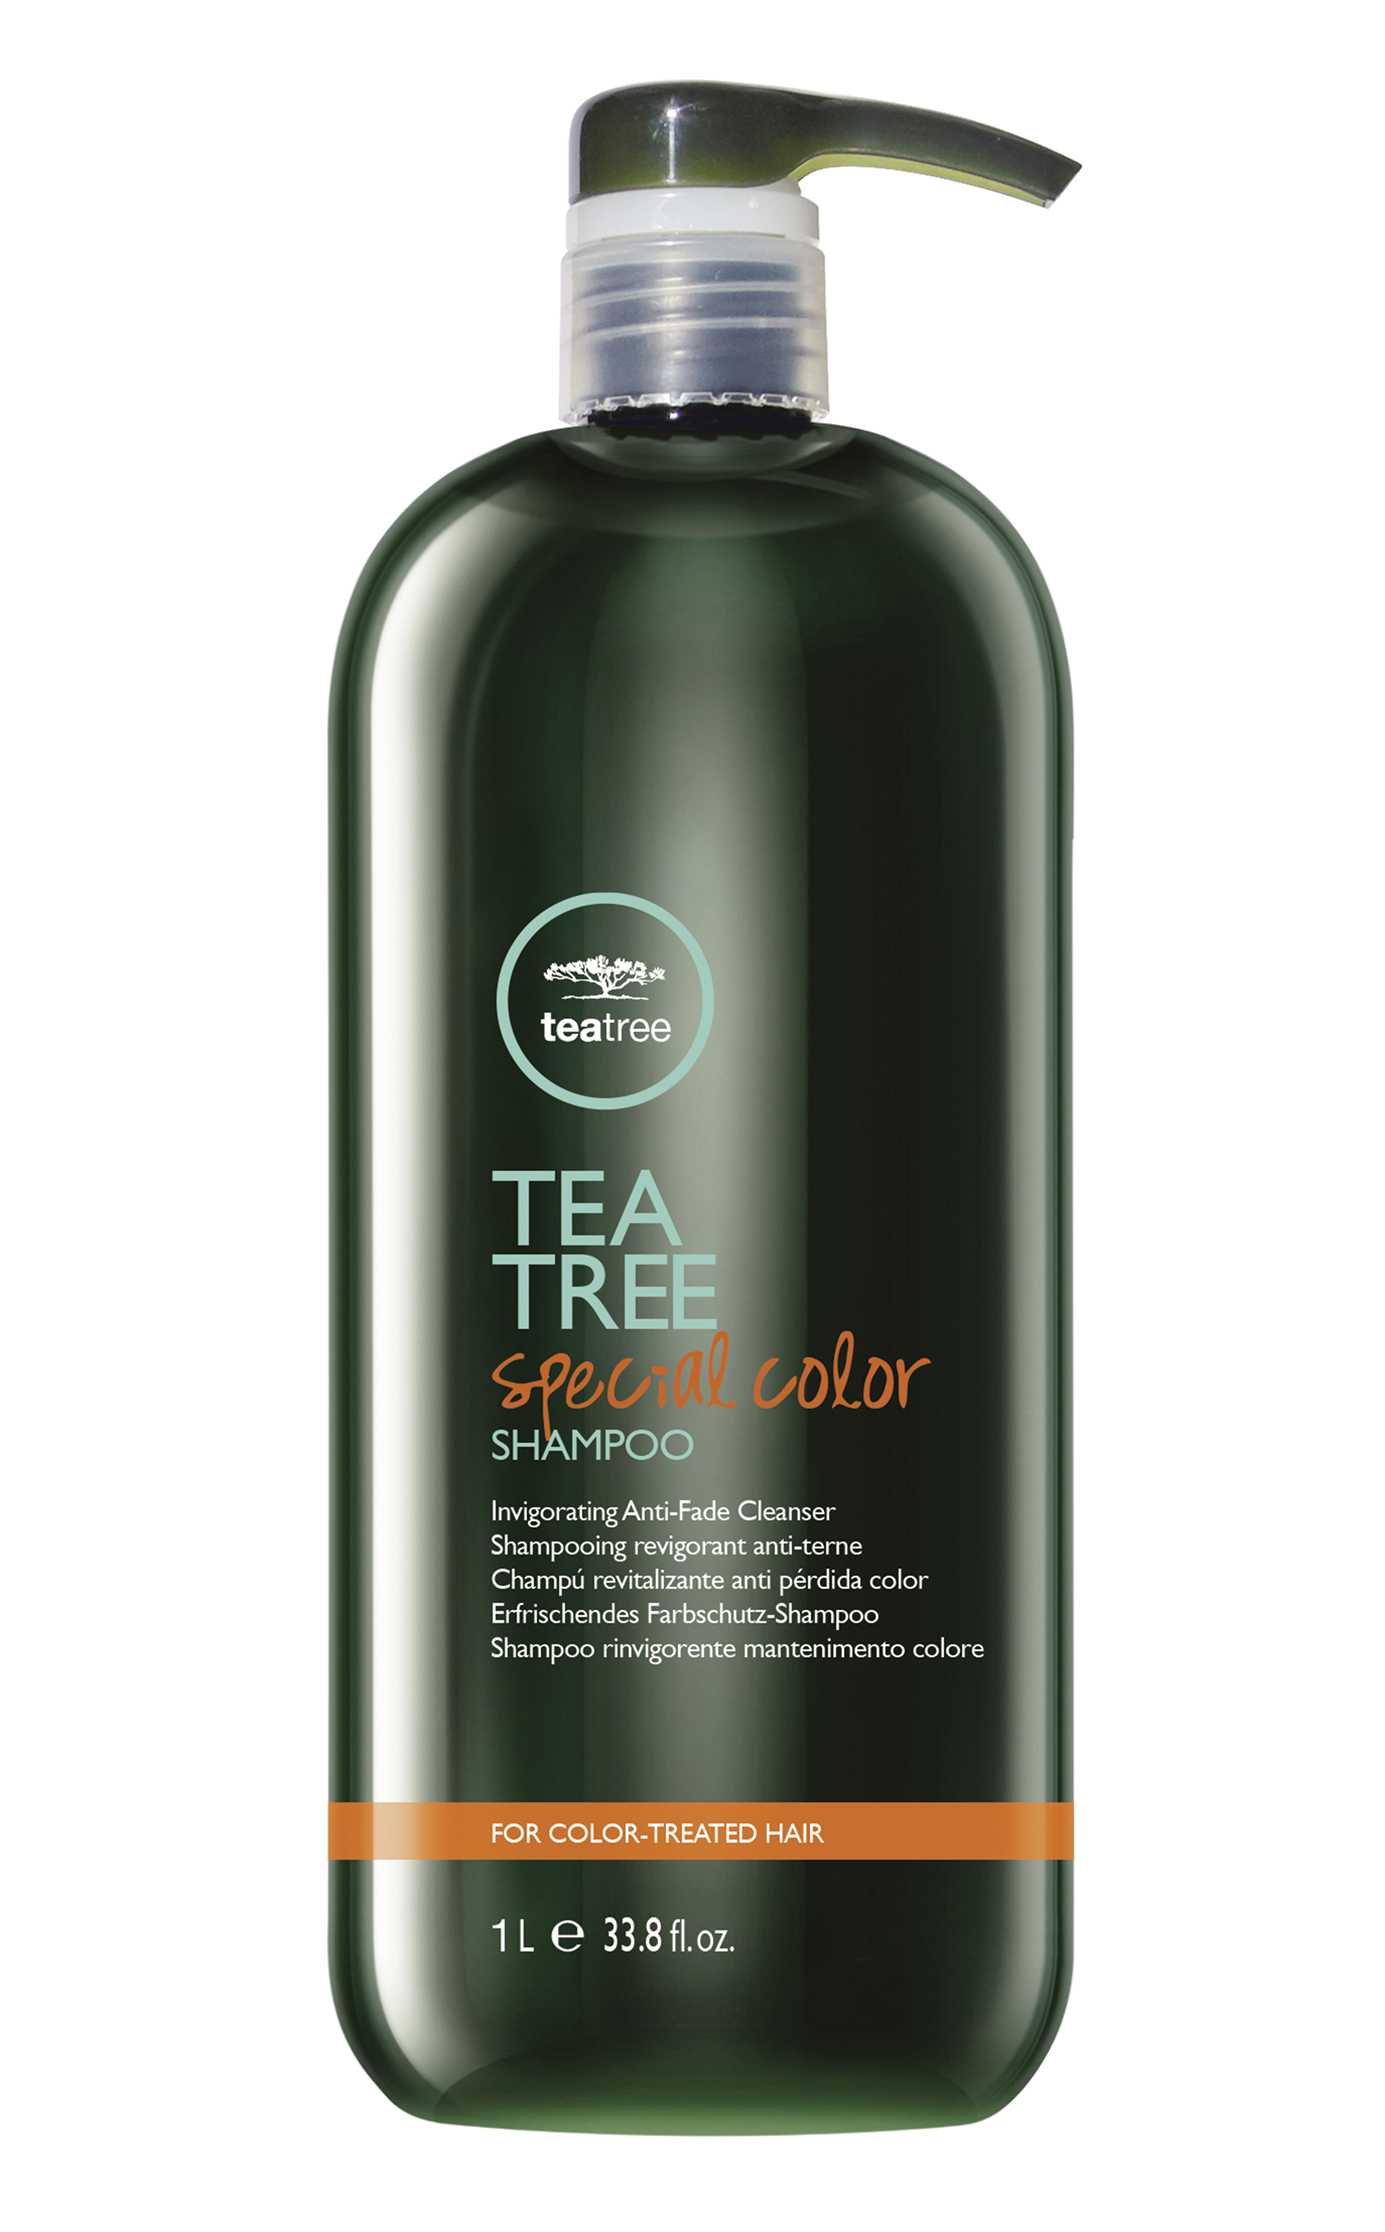 TEA TREE SPECIAL COLOR SHAMPOO®